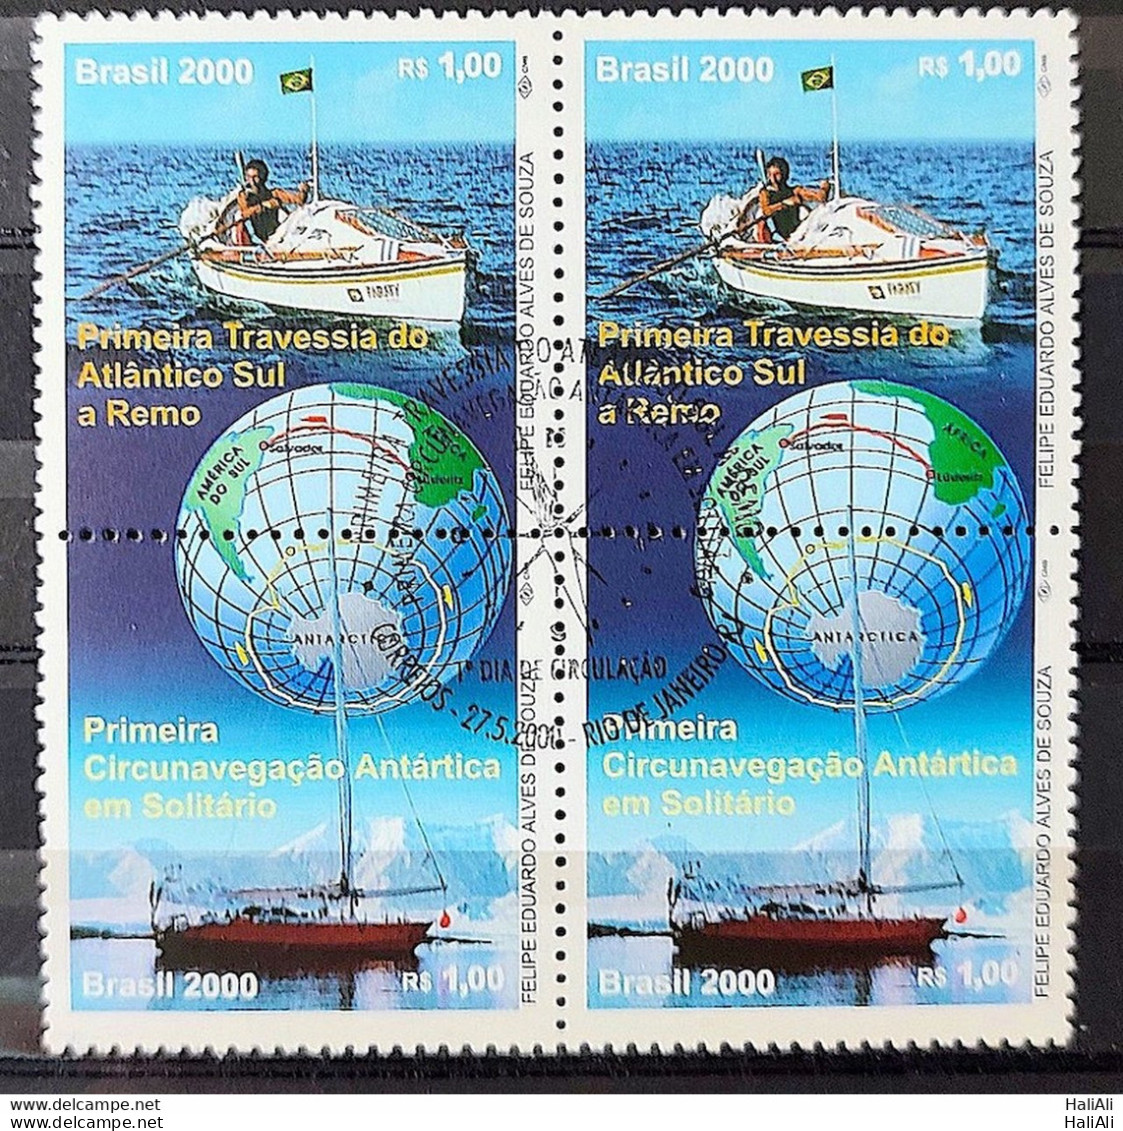 C 2282 Brazil Stamp Atlantic South Amyr Klink Parati Ship Flag Antartica Map 2000 Block Of 4 CBC RJ - Unused Stamps